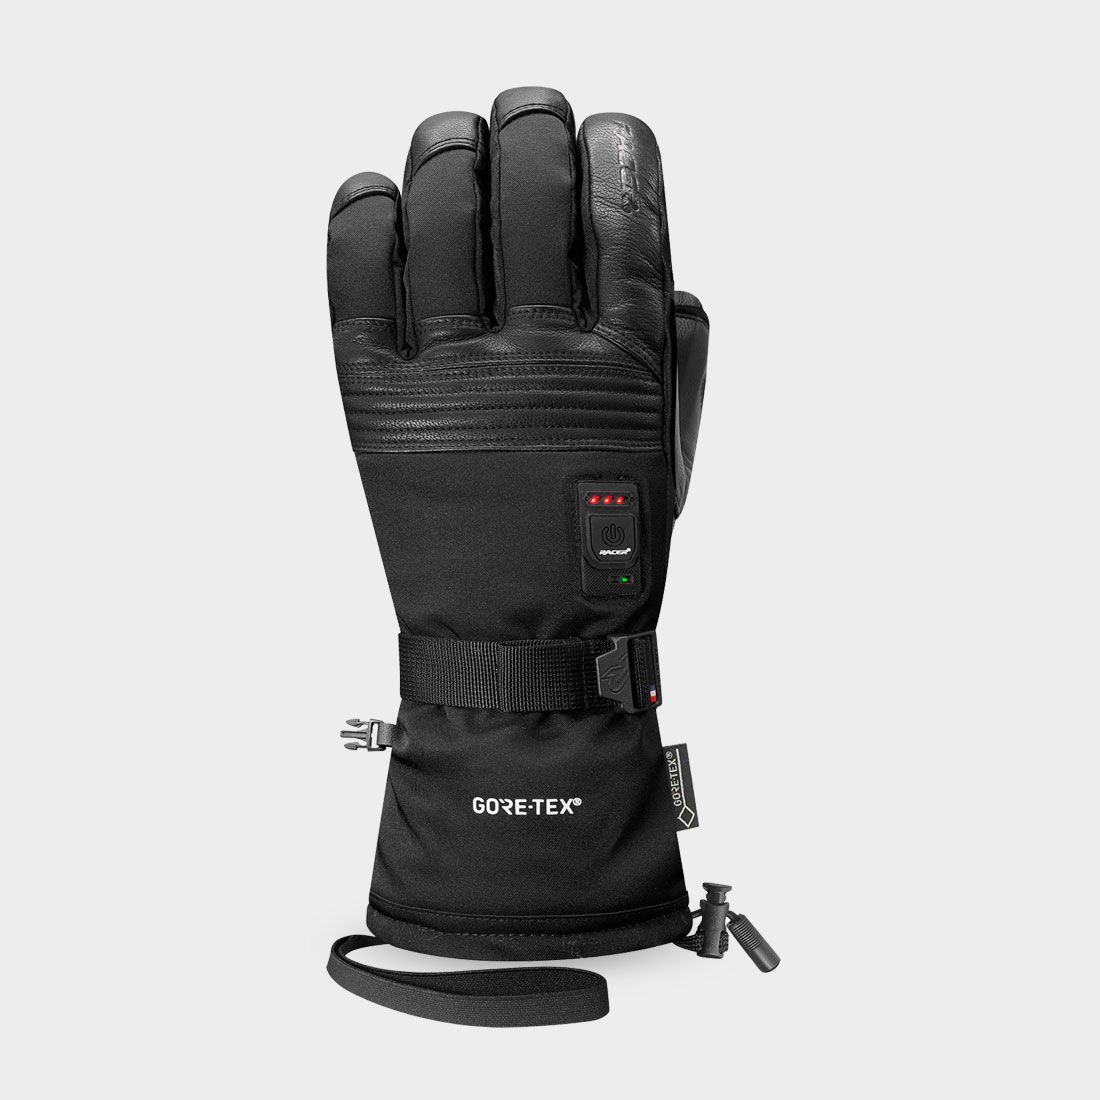 IWARM GTX - Heated Gloves